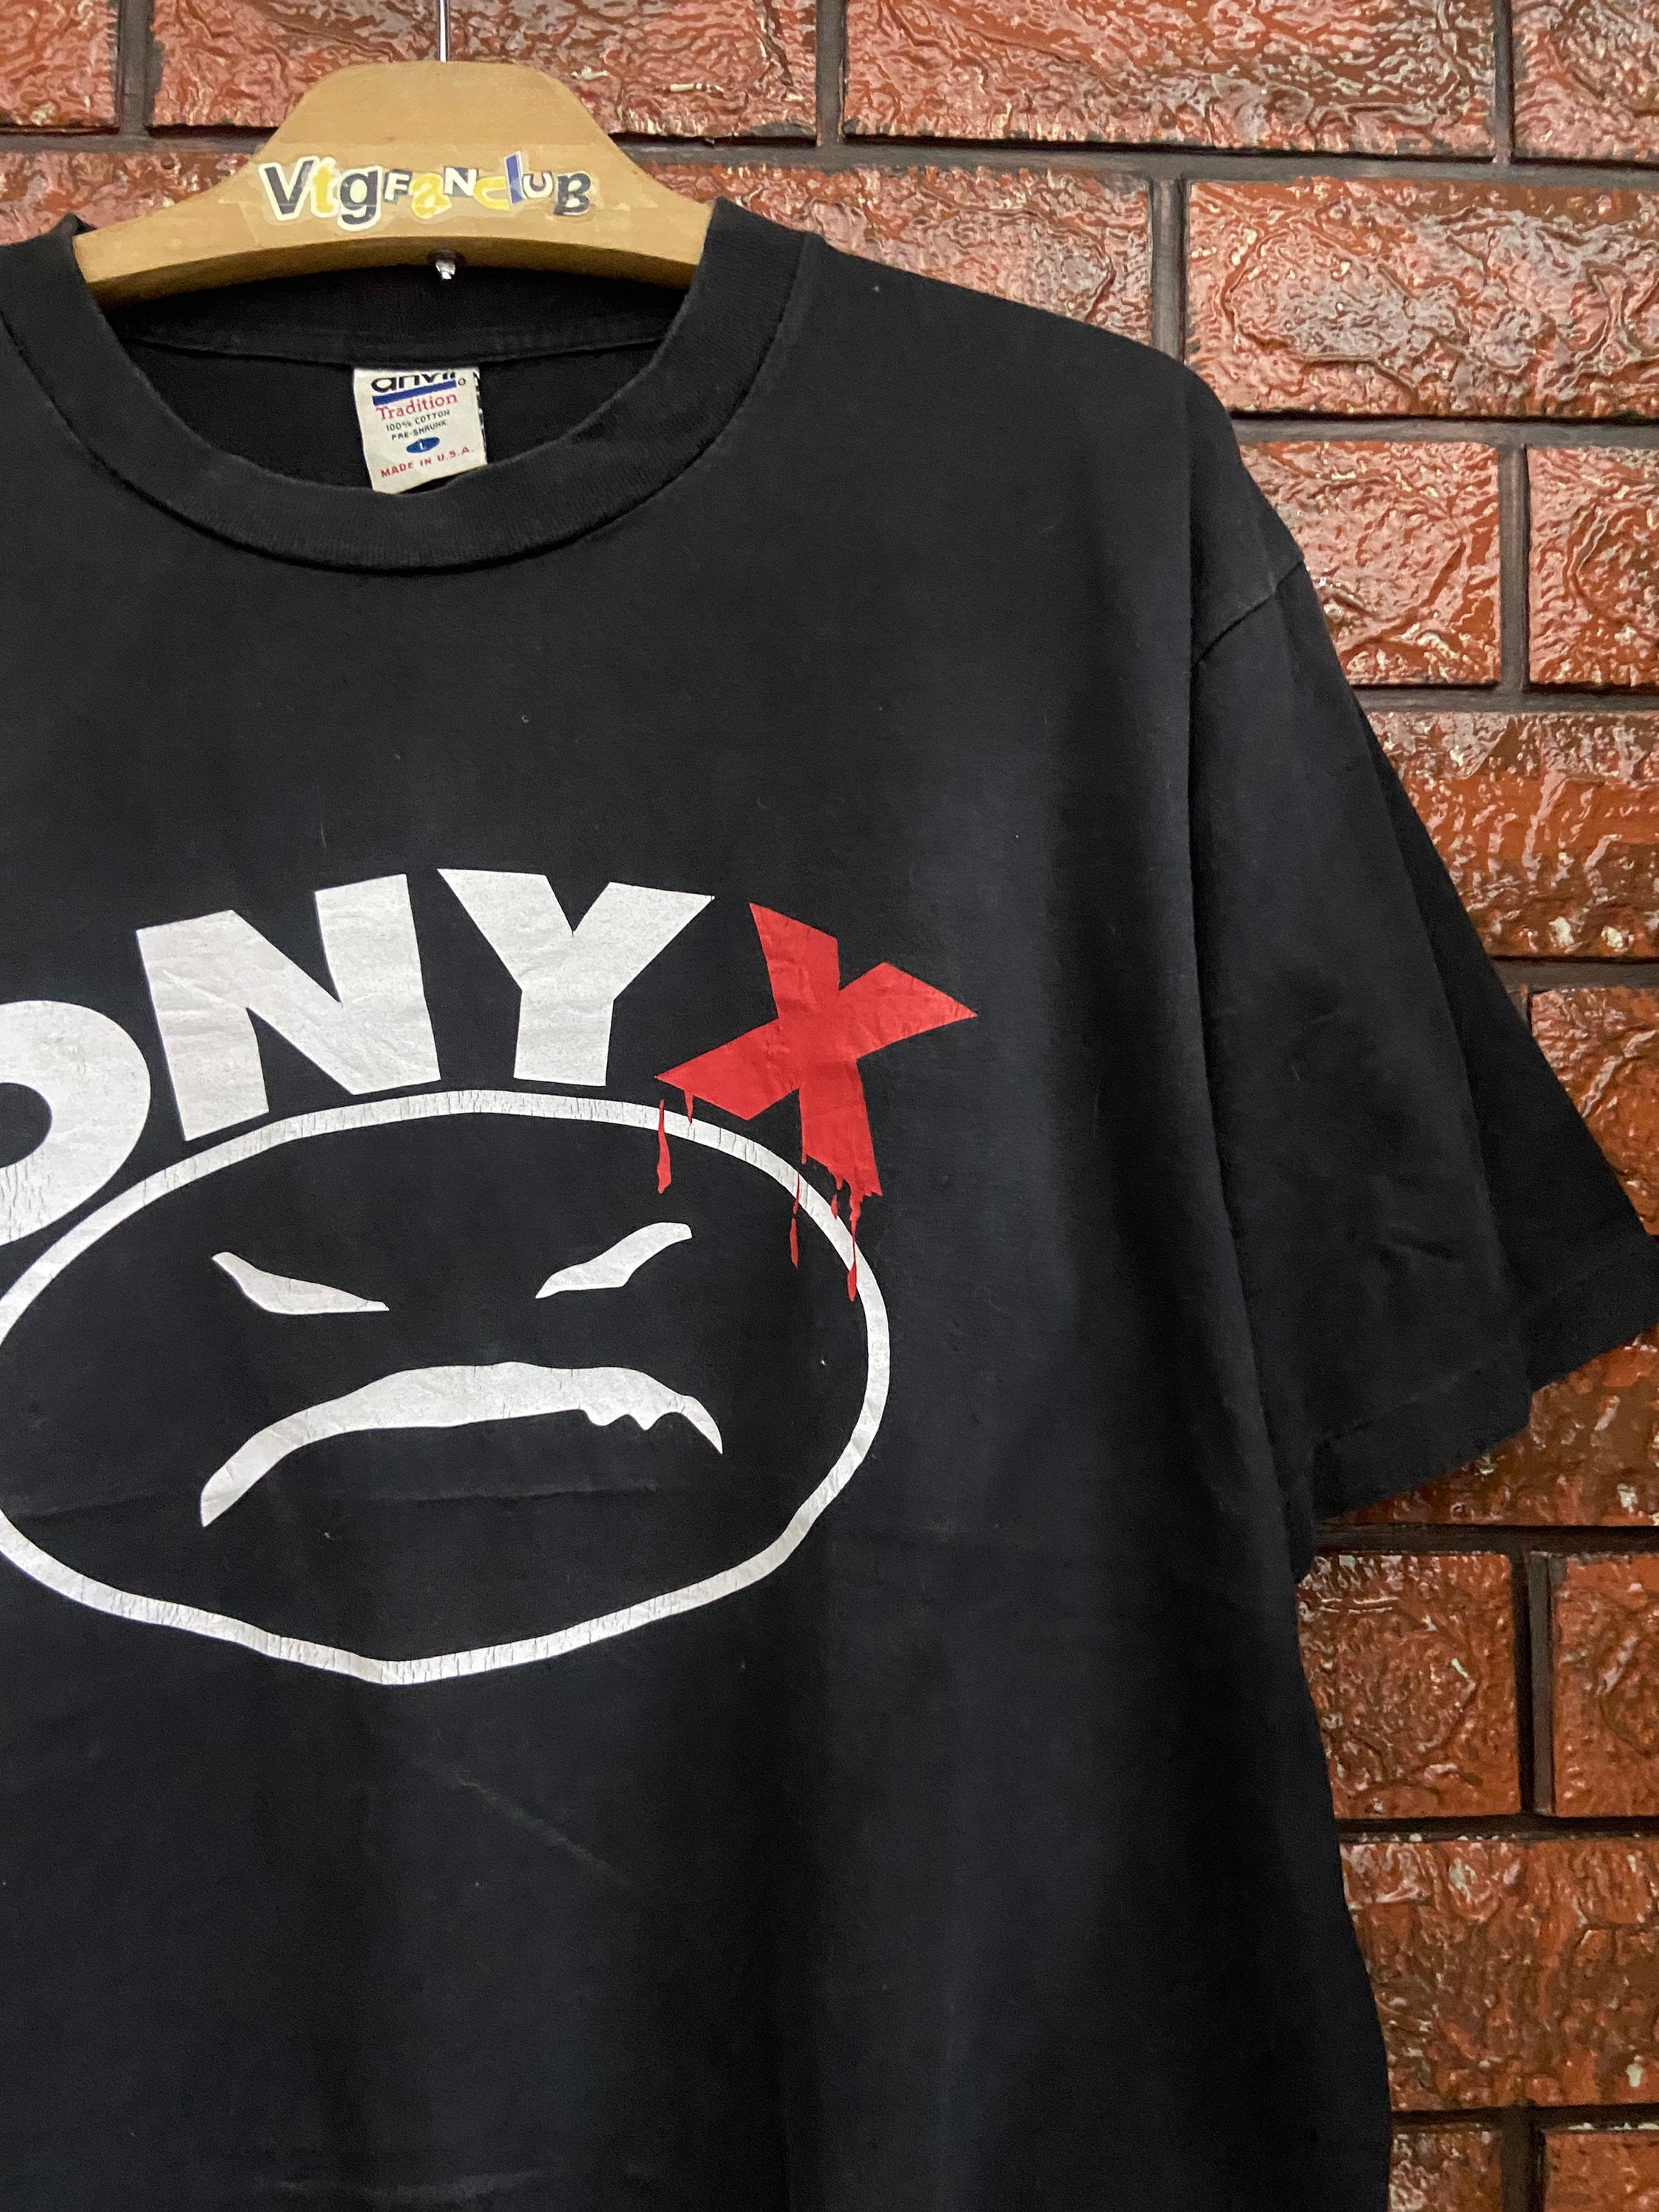 Onyx T Shirt East Coast Old School Rap Hip Hop